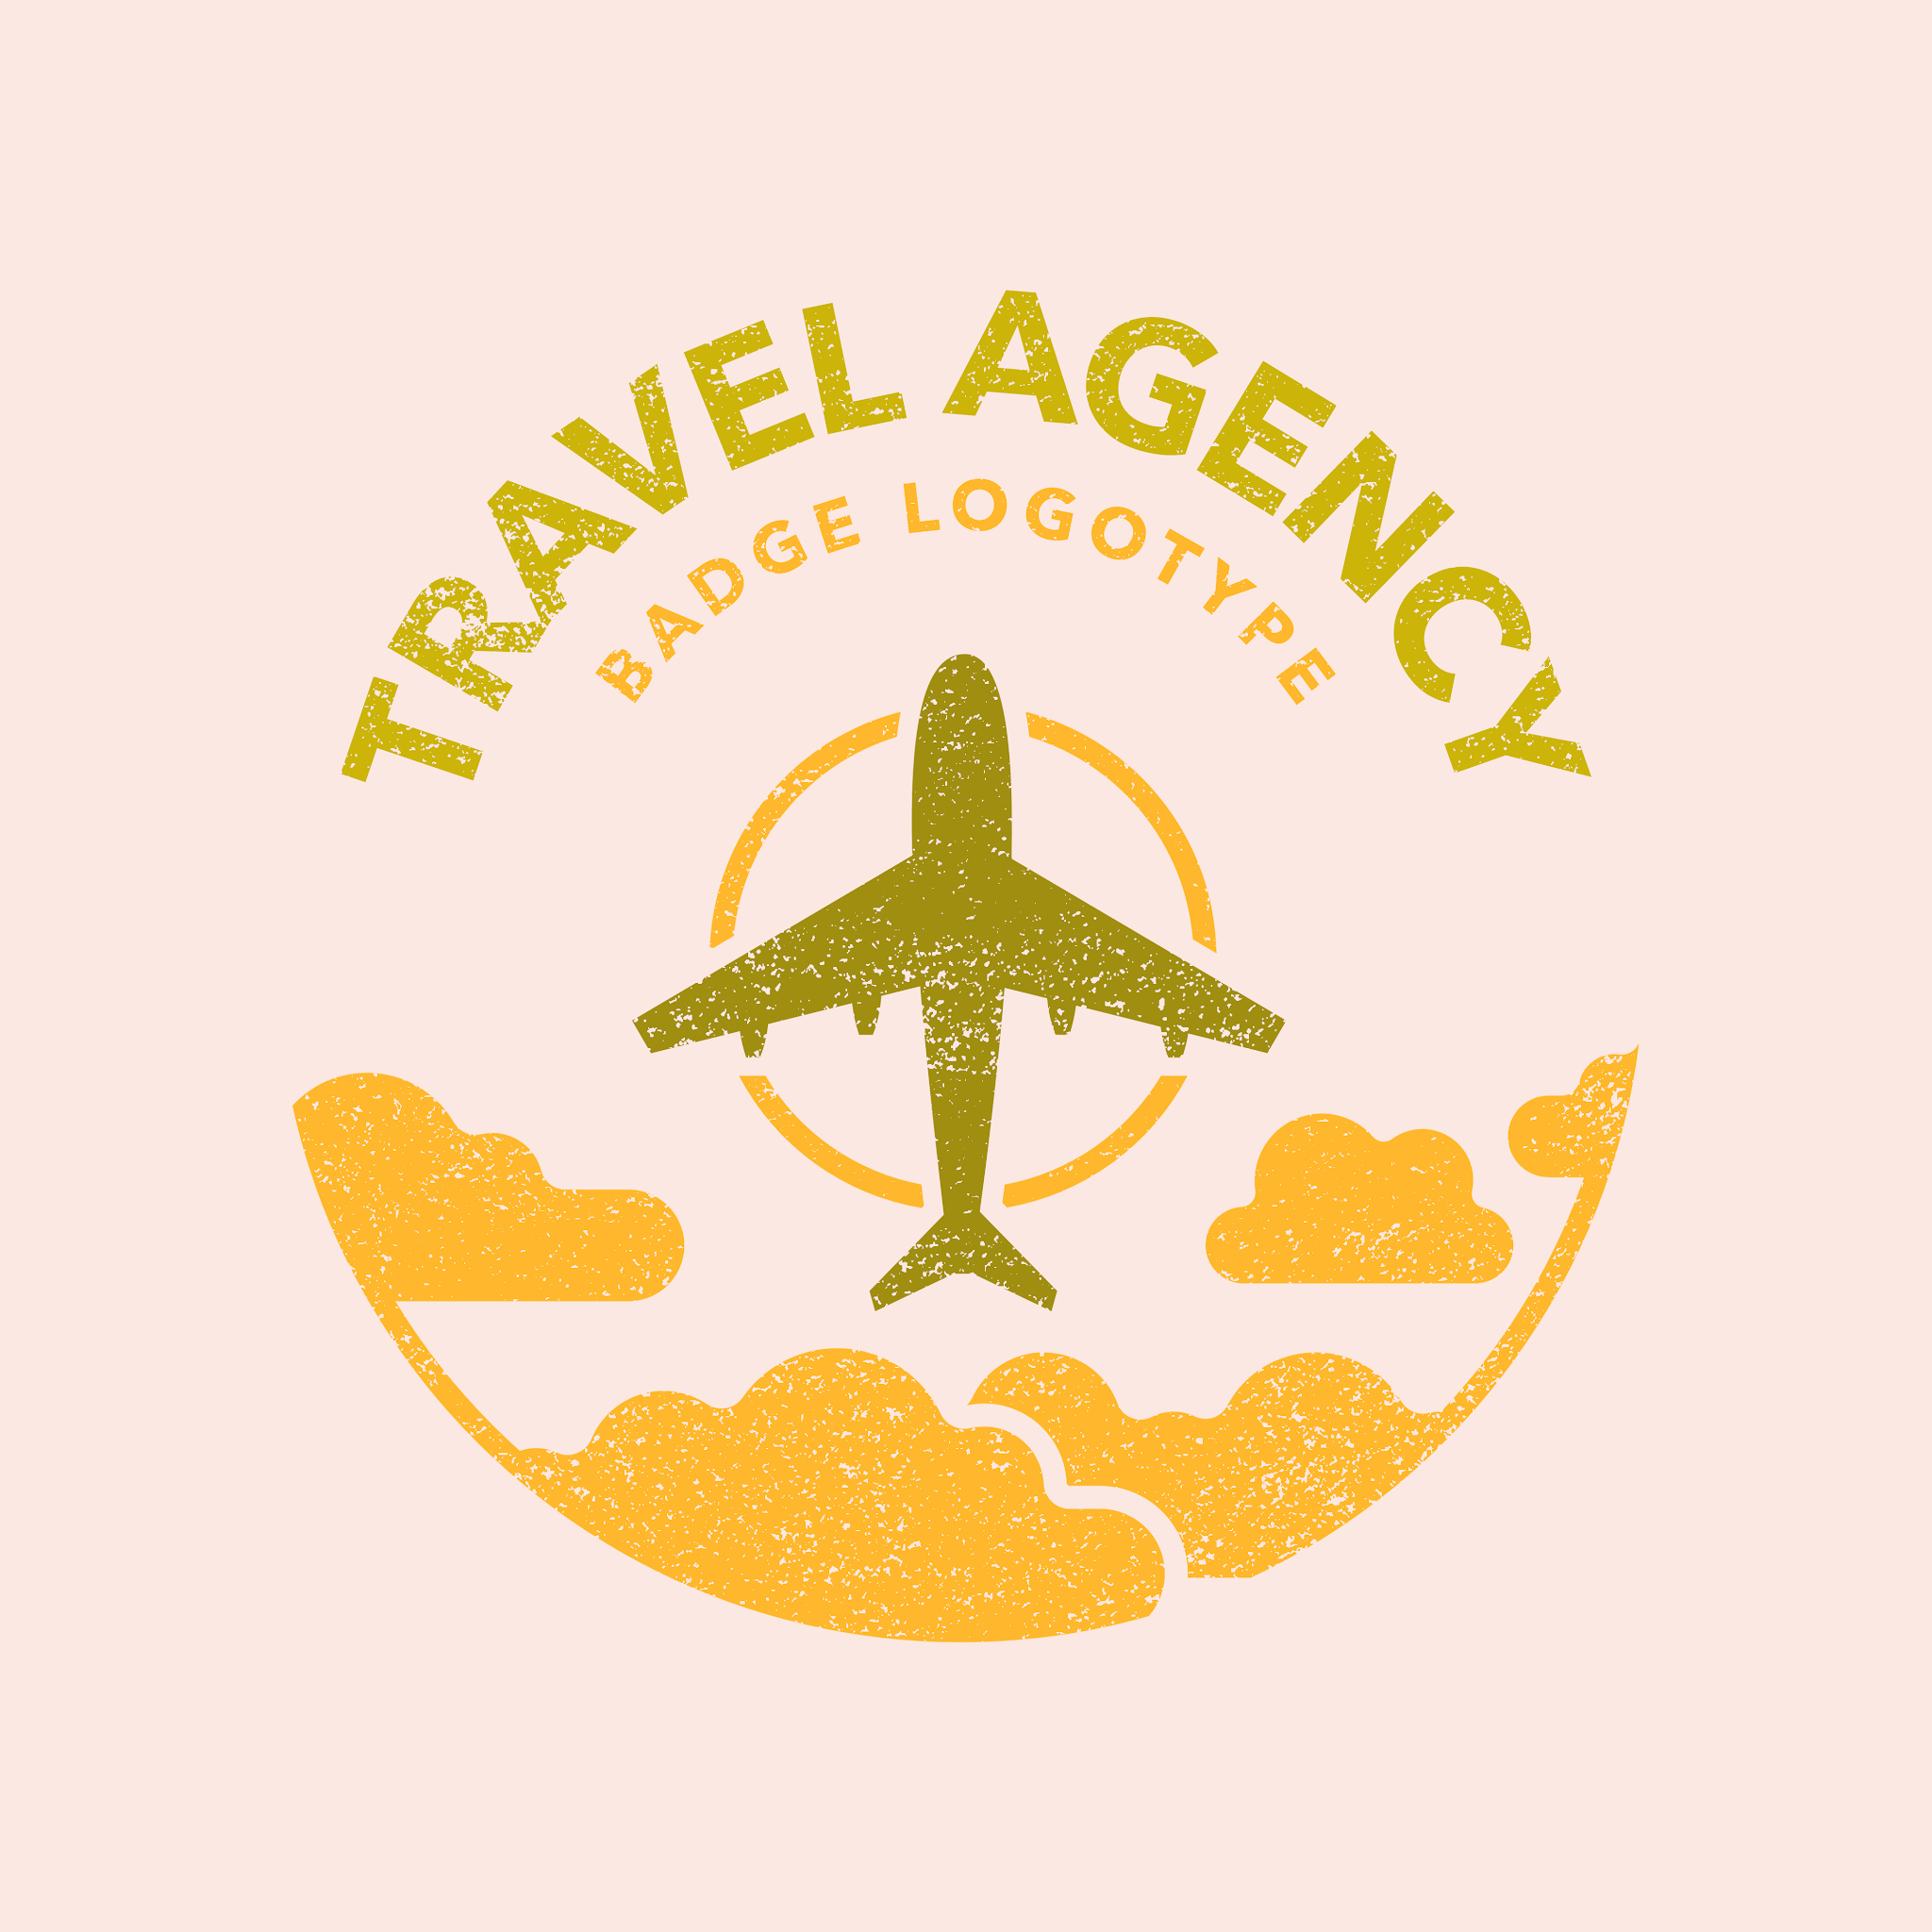 travel agent logo images